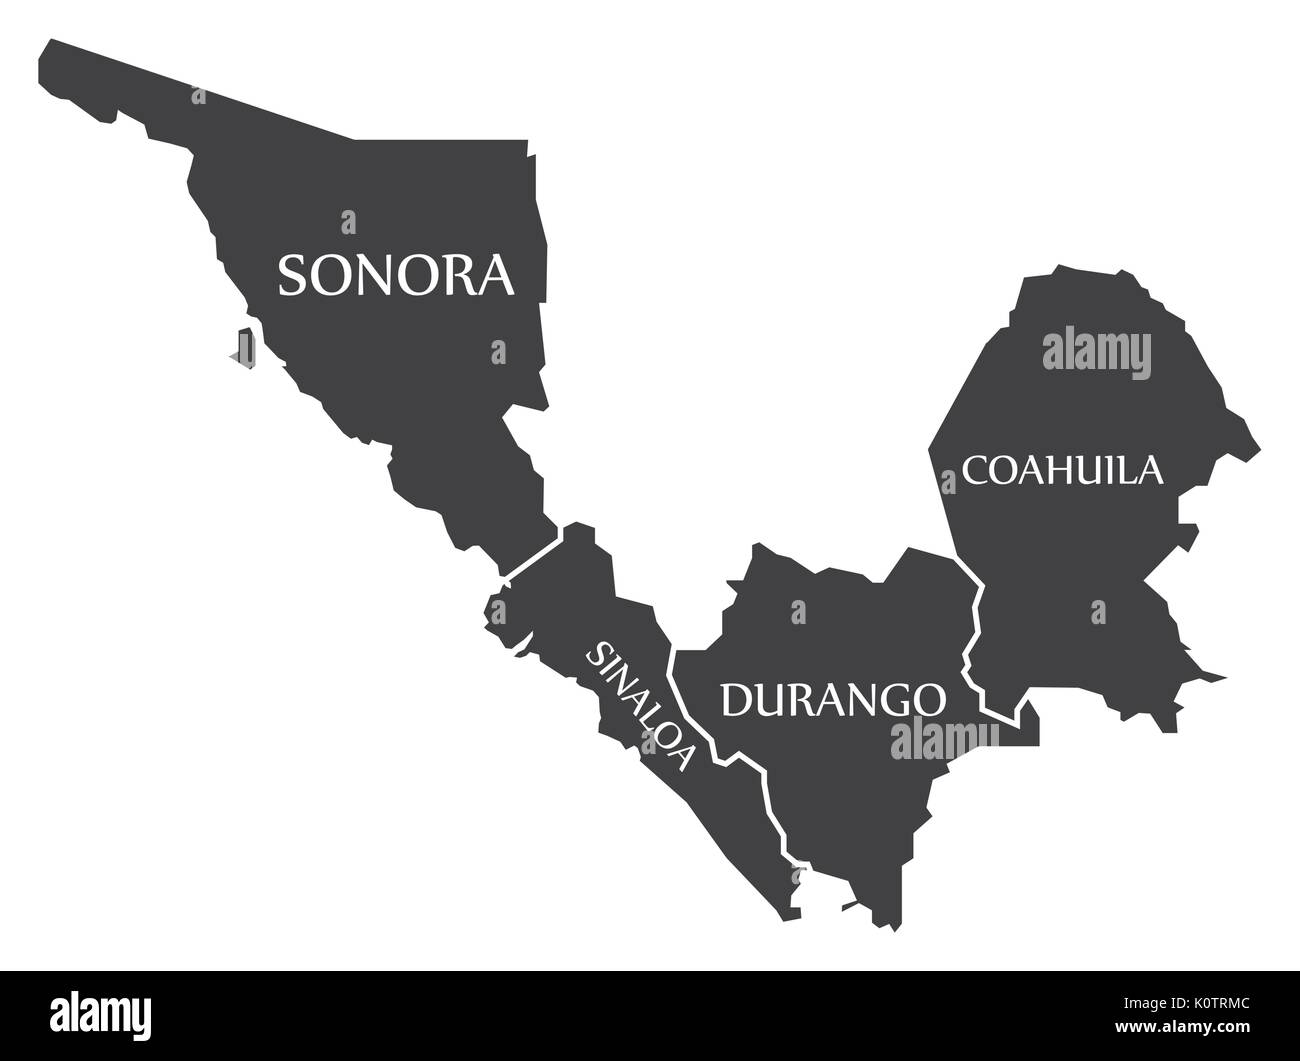 Sonora - Sinaloa - Durango - Coahuila Map Mexico illustration Stock Vector